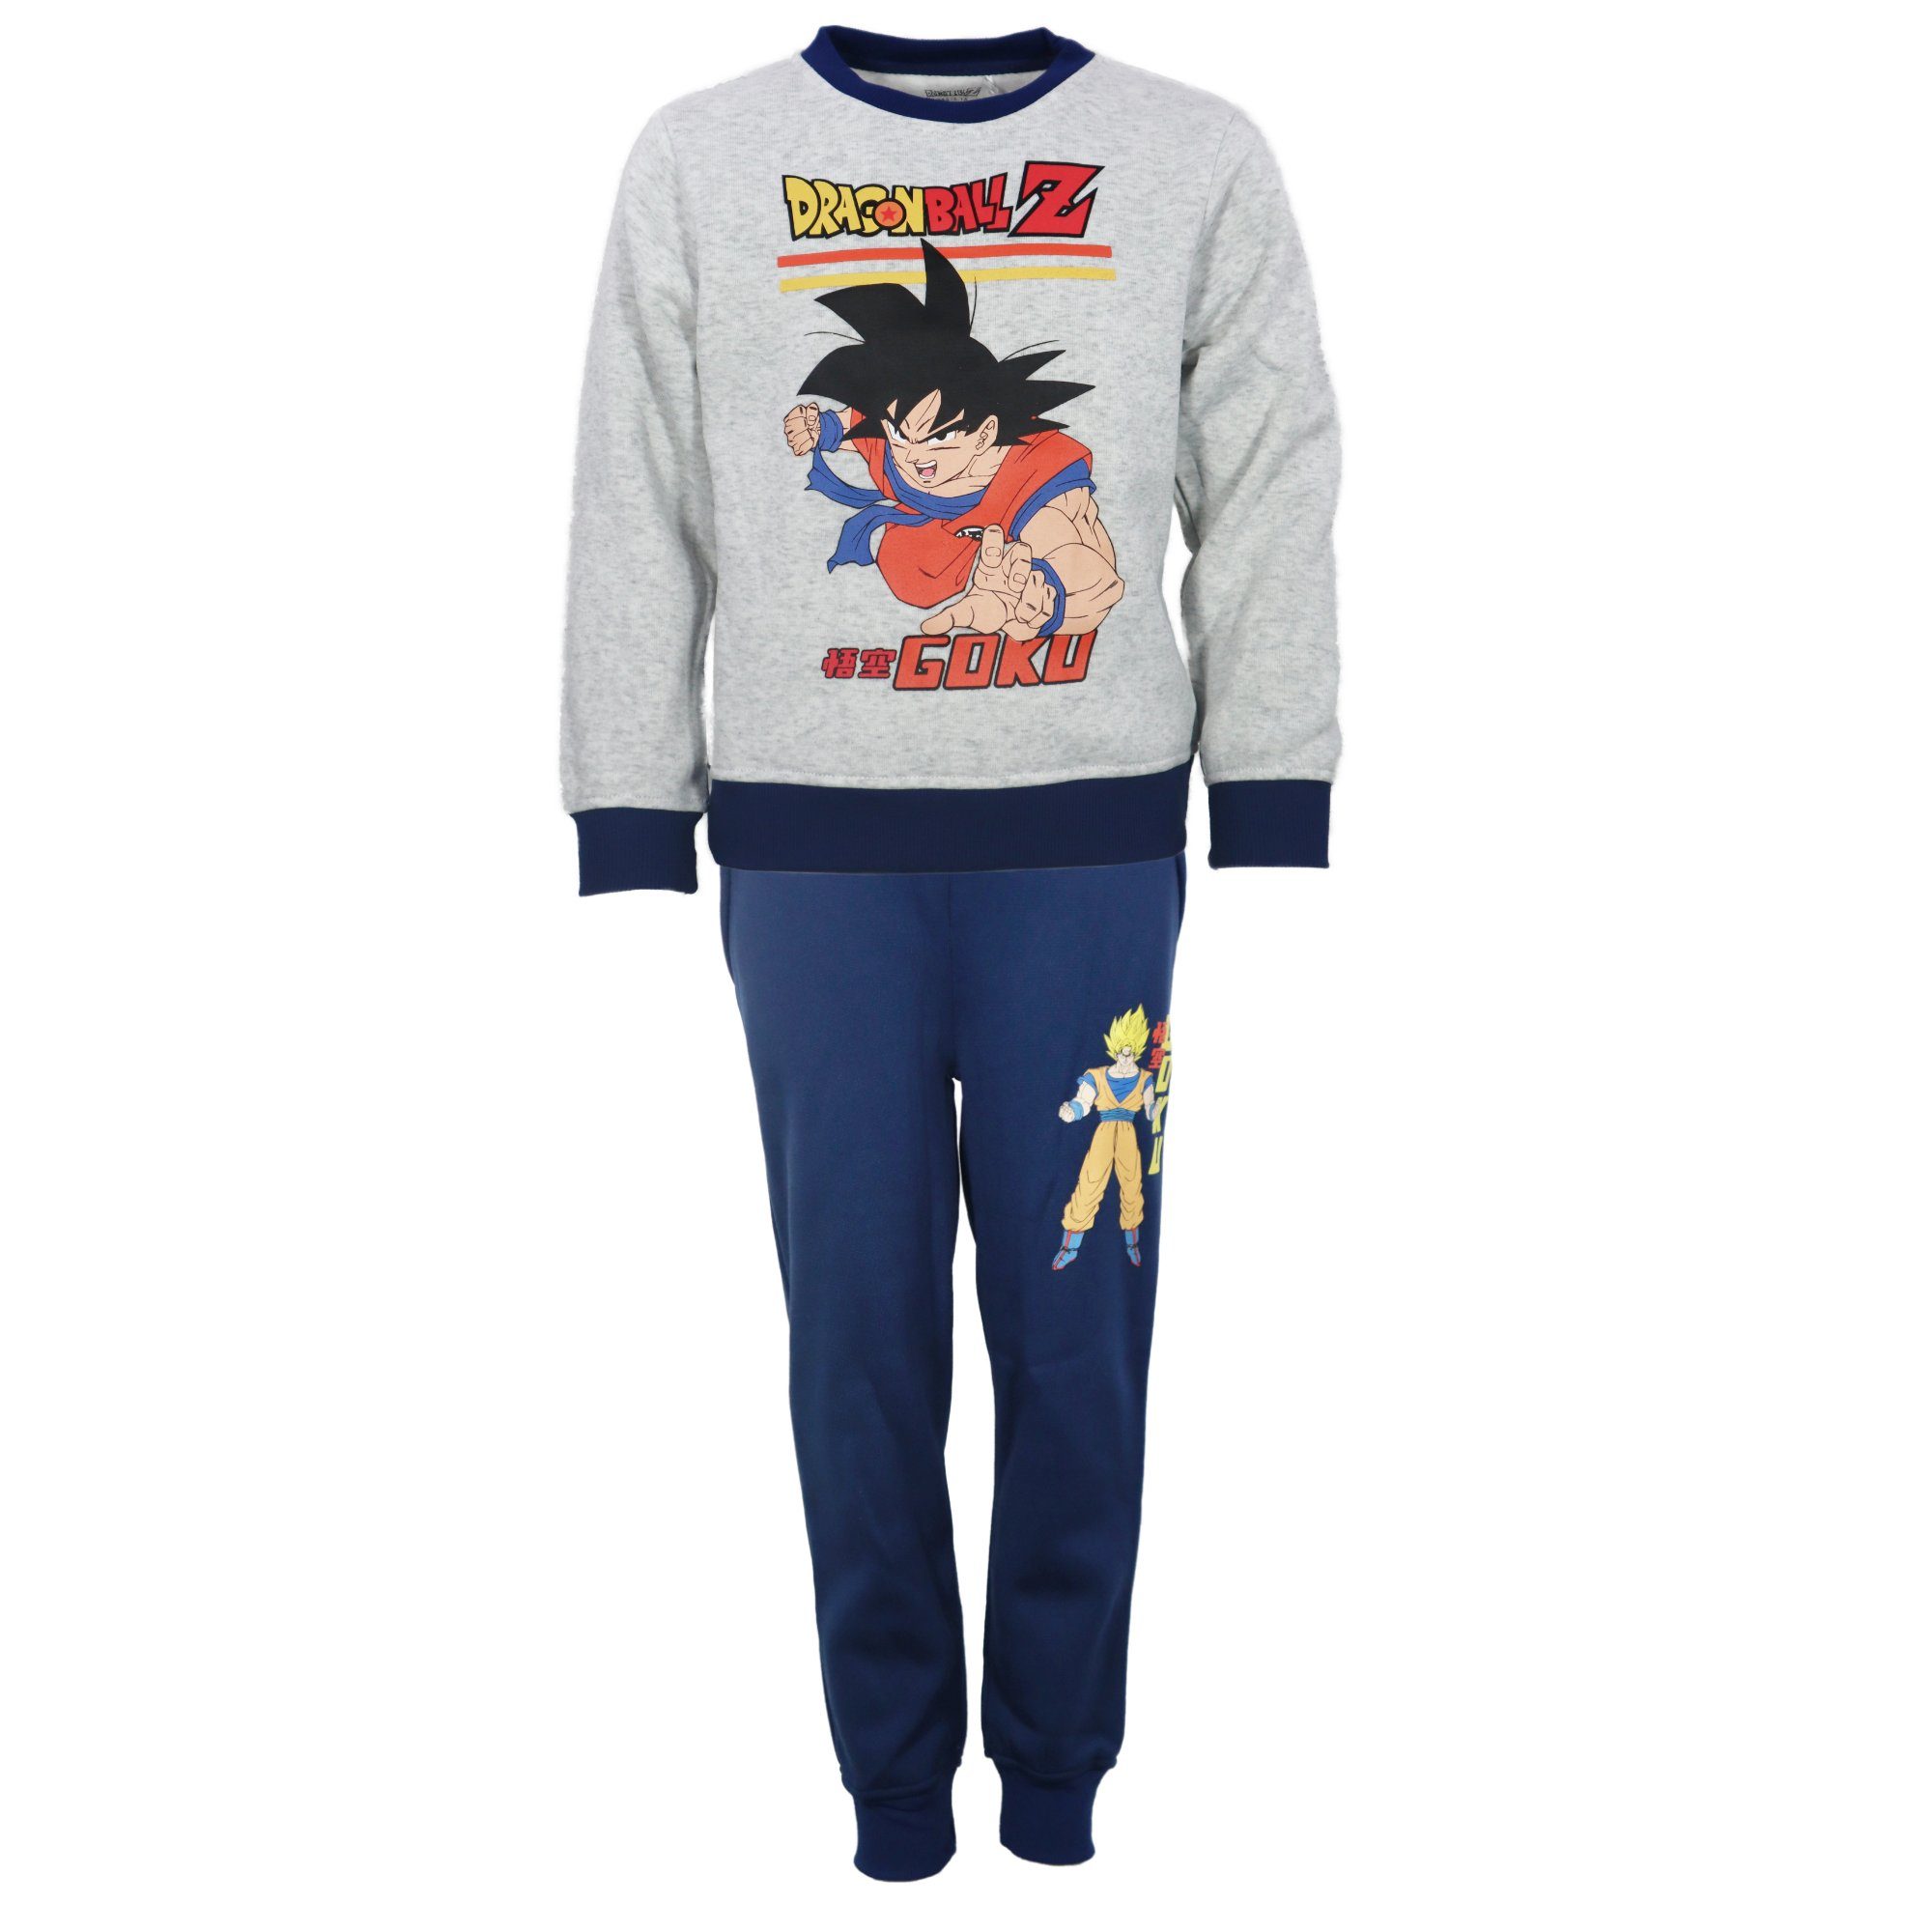 Dragon Ball Jogginganzug Anime Dragonball Goku Sporthose Hose Sweater Pulli, Gr. 104 bis 140